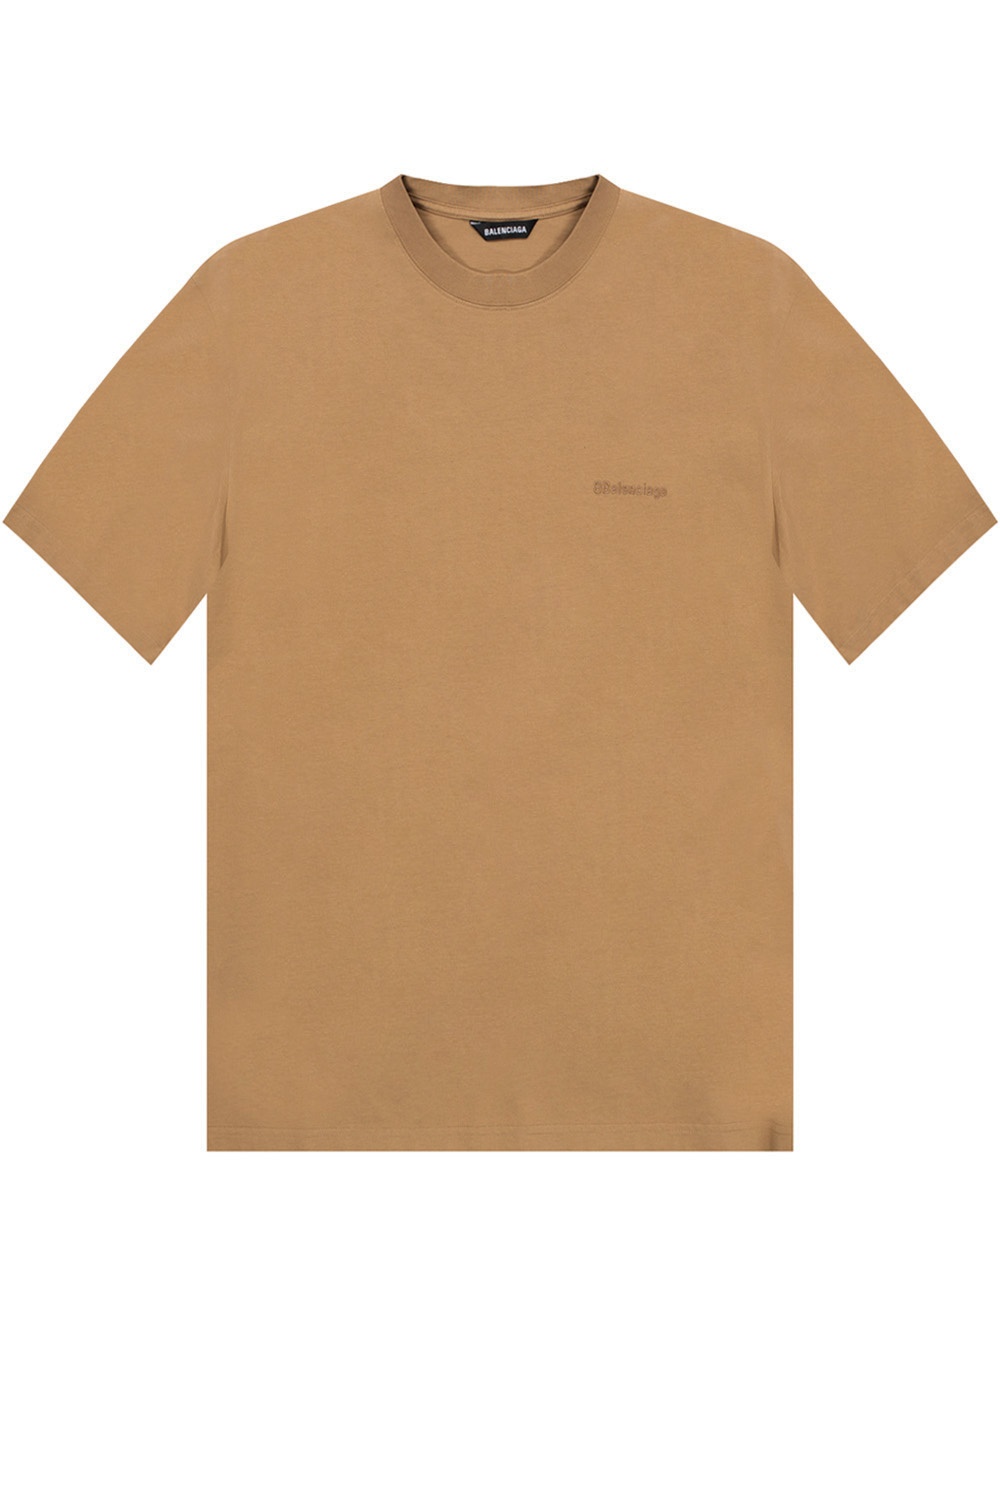 Yeezy Gap Engineered by Balenciaga Dove No Seam Tshirt Beige  SS22  US